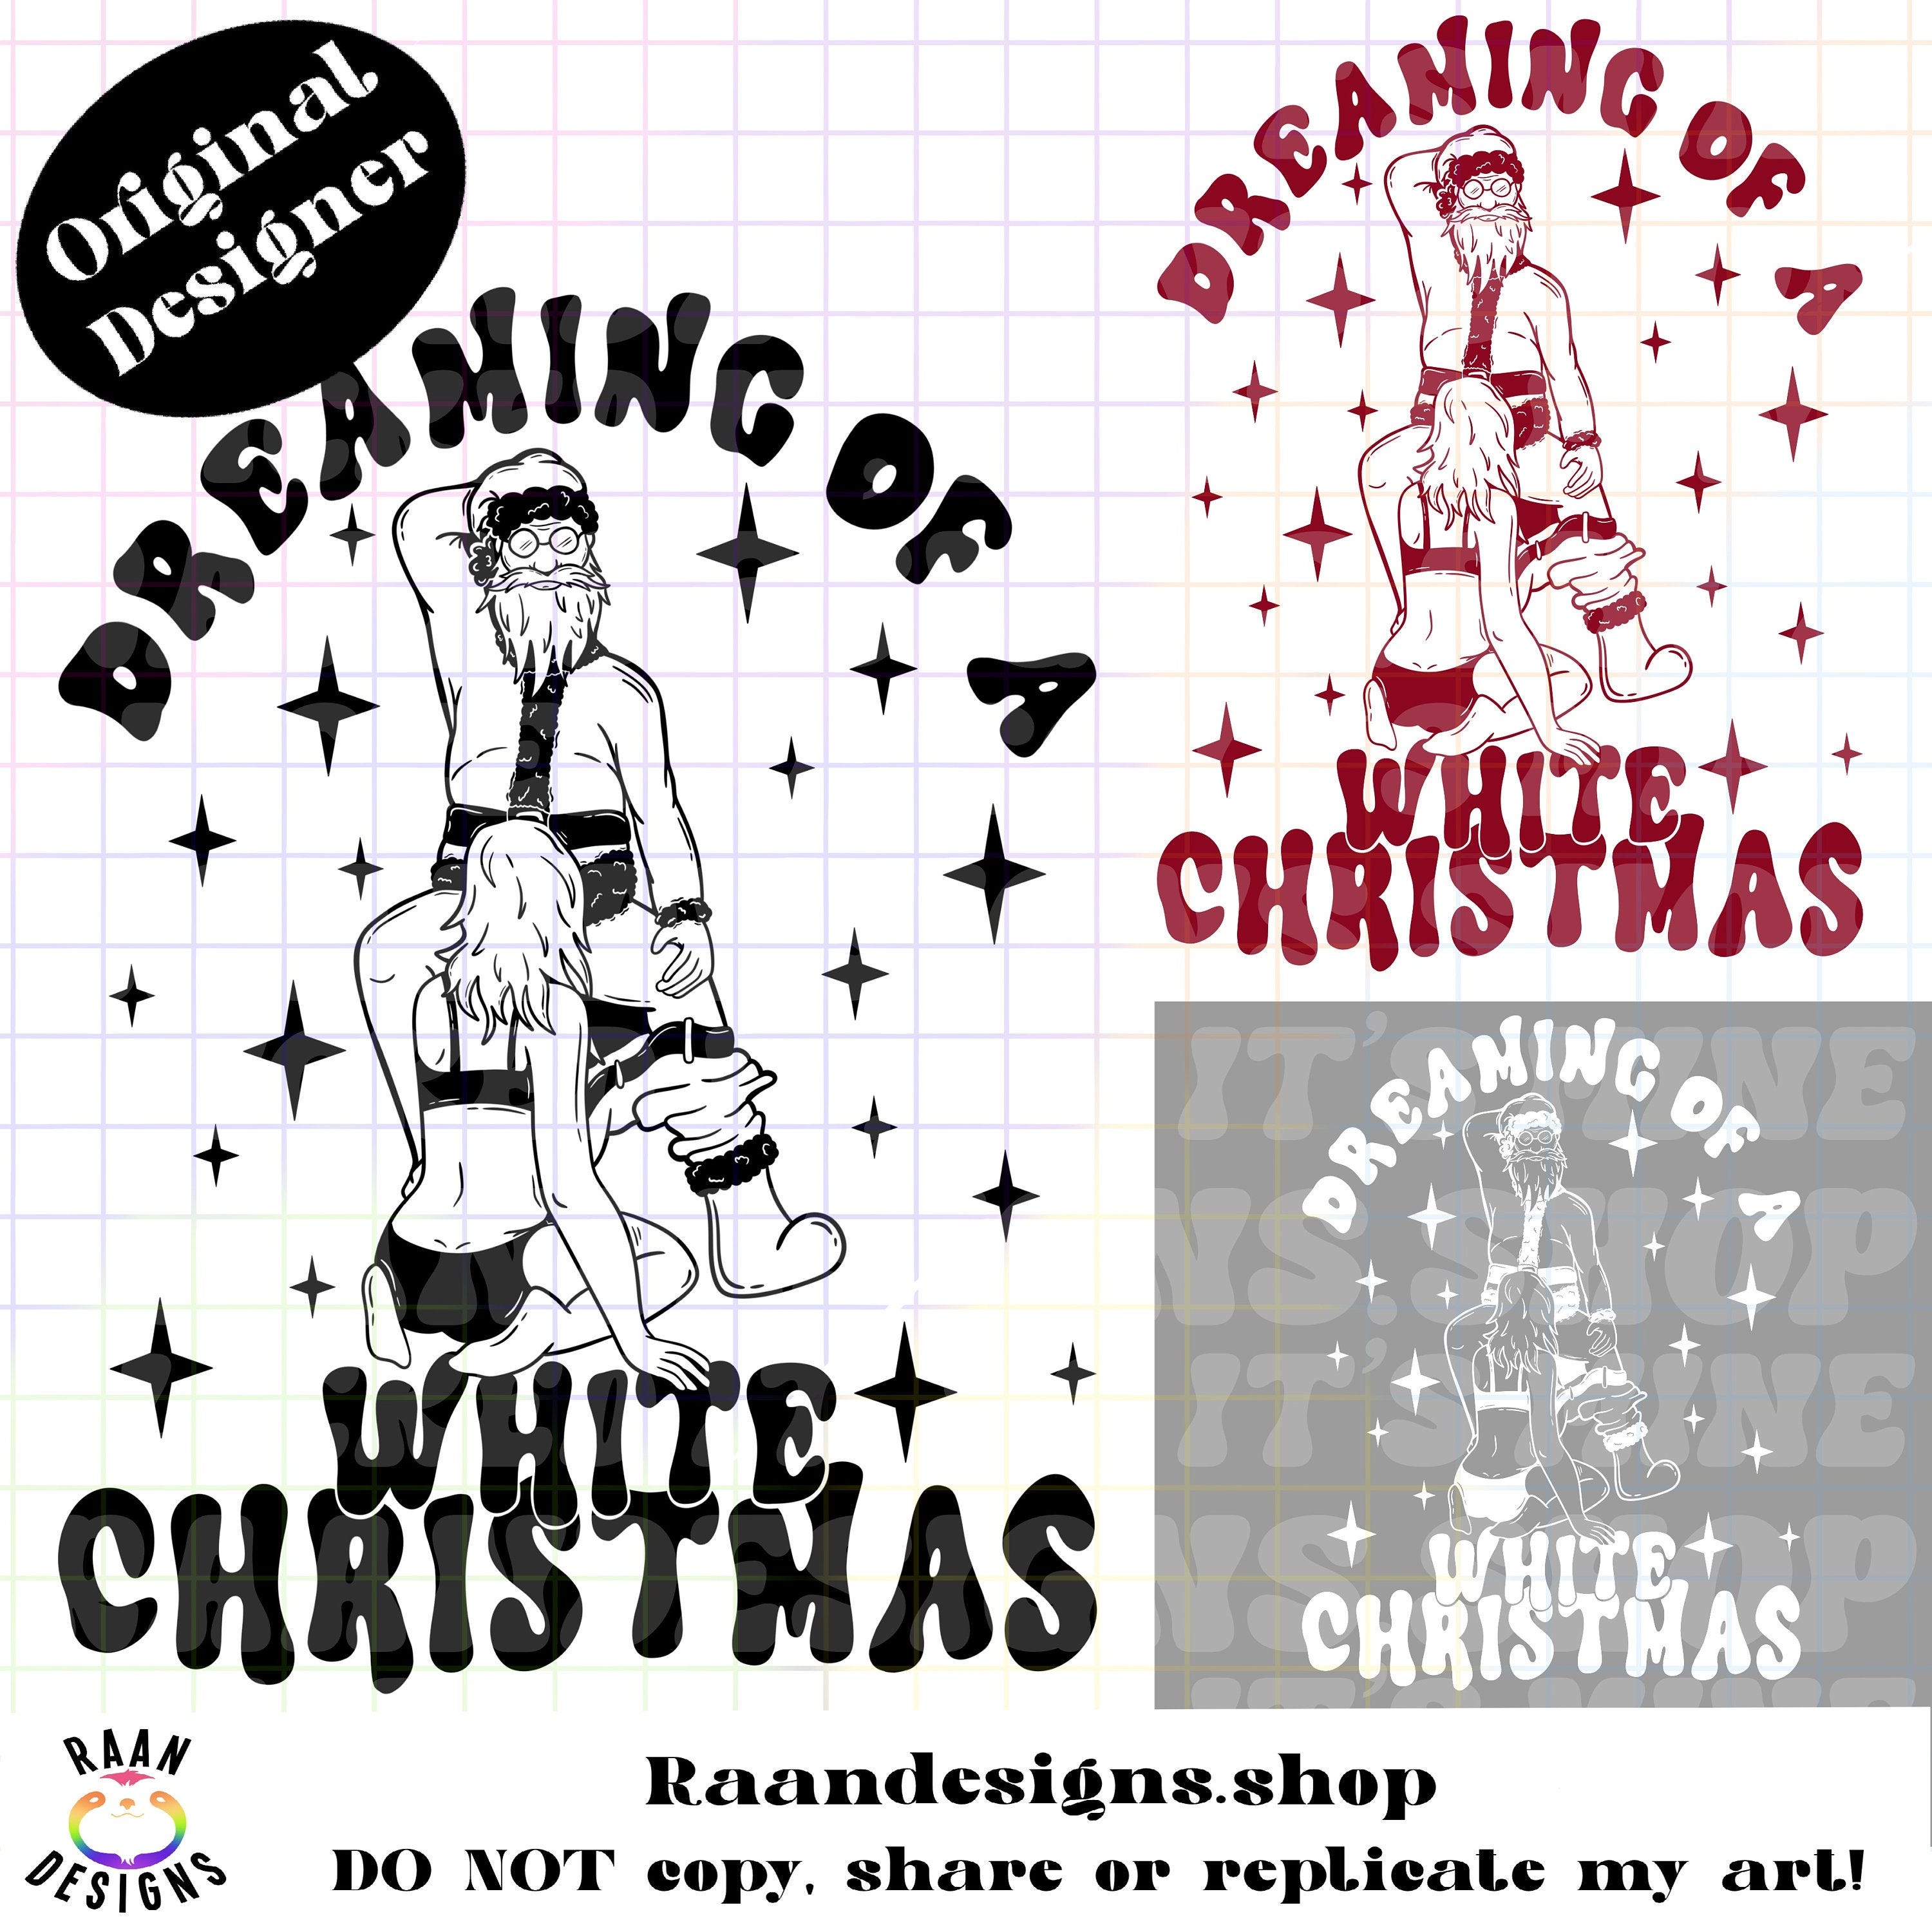 Dreaming Of A White Christmas Naughty Santa-Color-PNG-Digital-Design-Adult-Humor-Funny-TShirt-Bad Santa-Sexy-BJ-Christmas-Cheer-Raan-RAAN